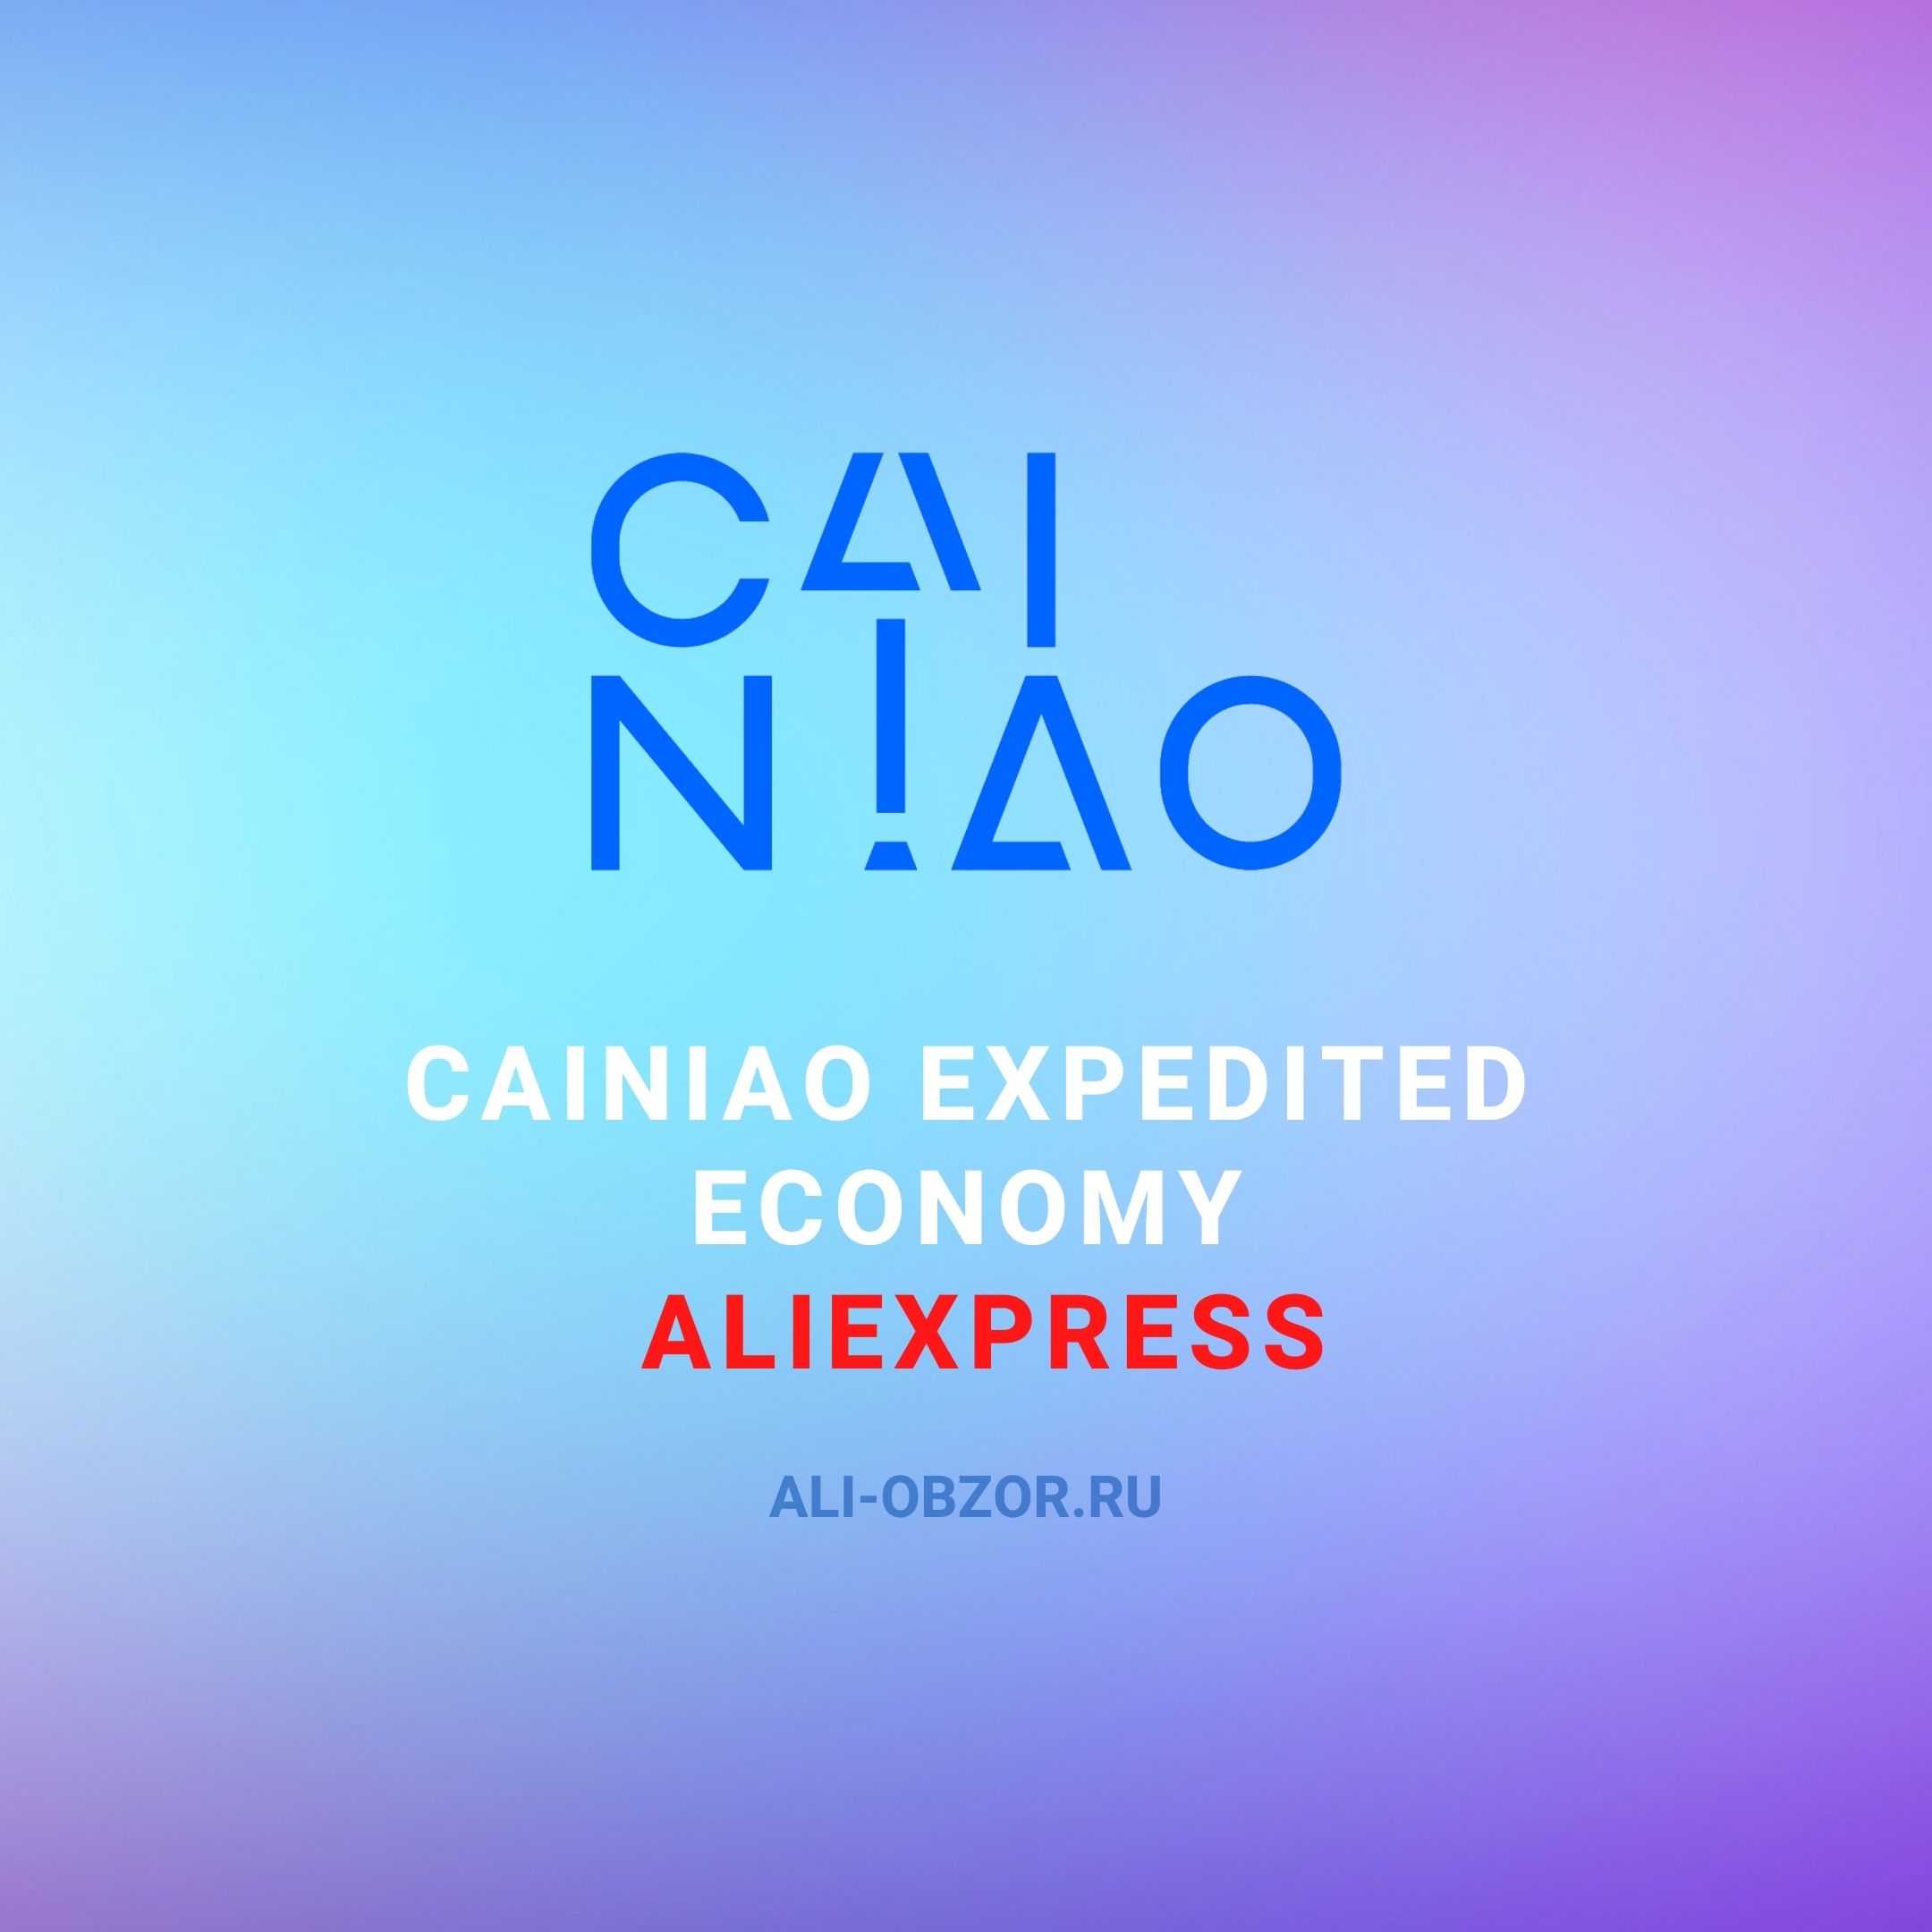 Aliexpress Cainiao